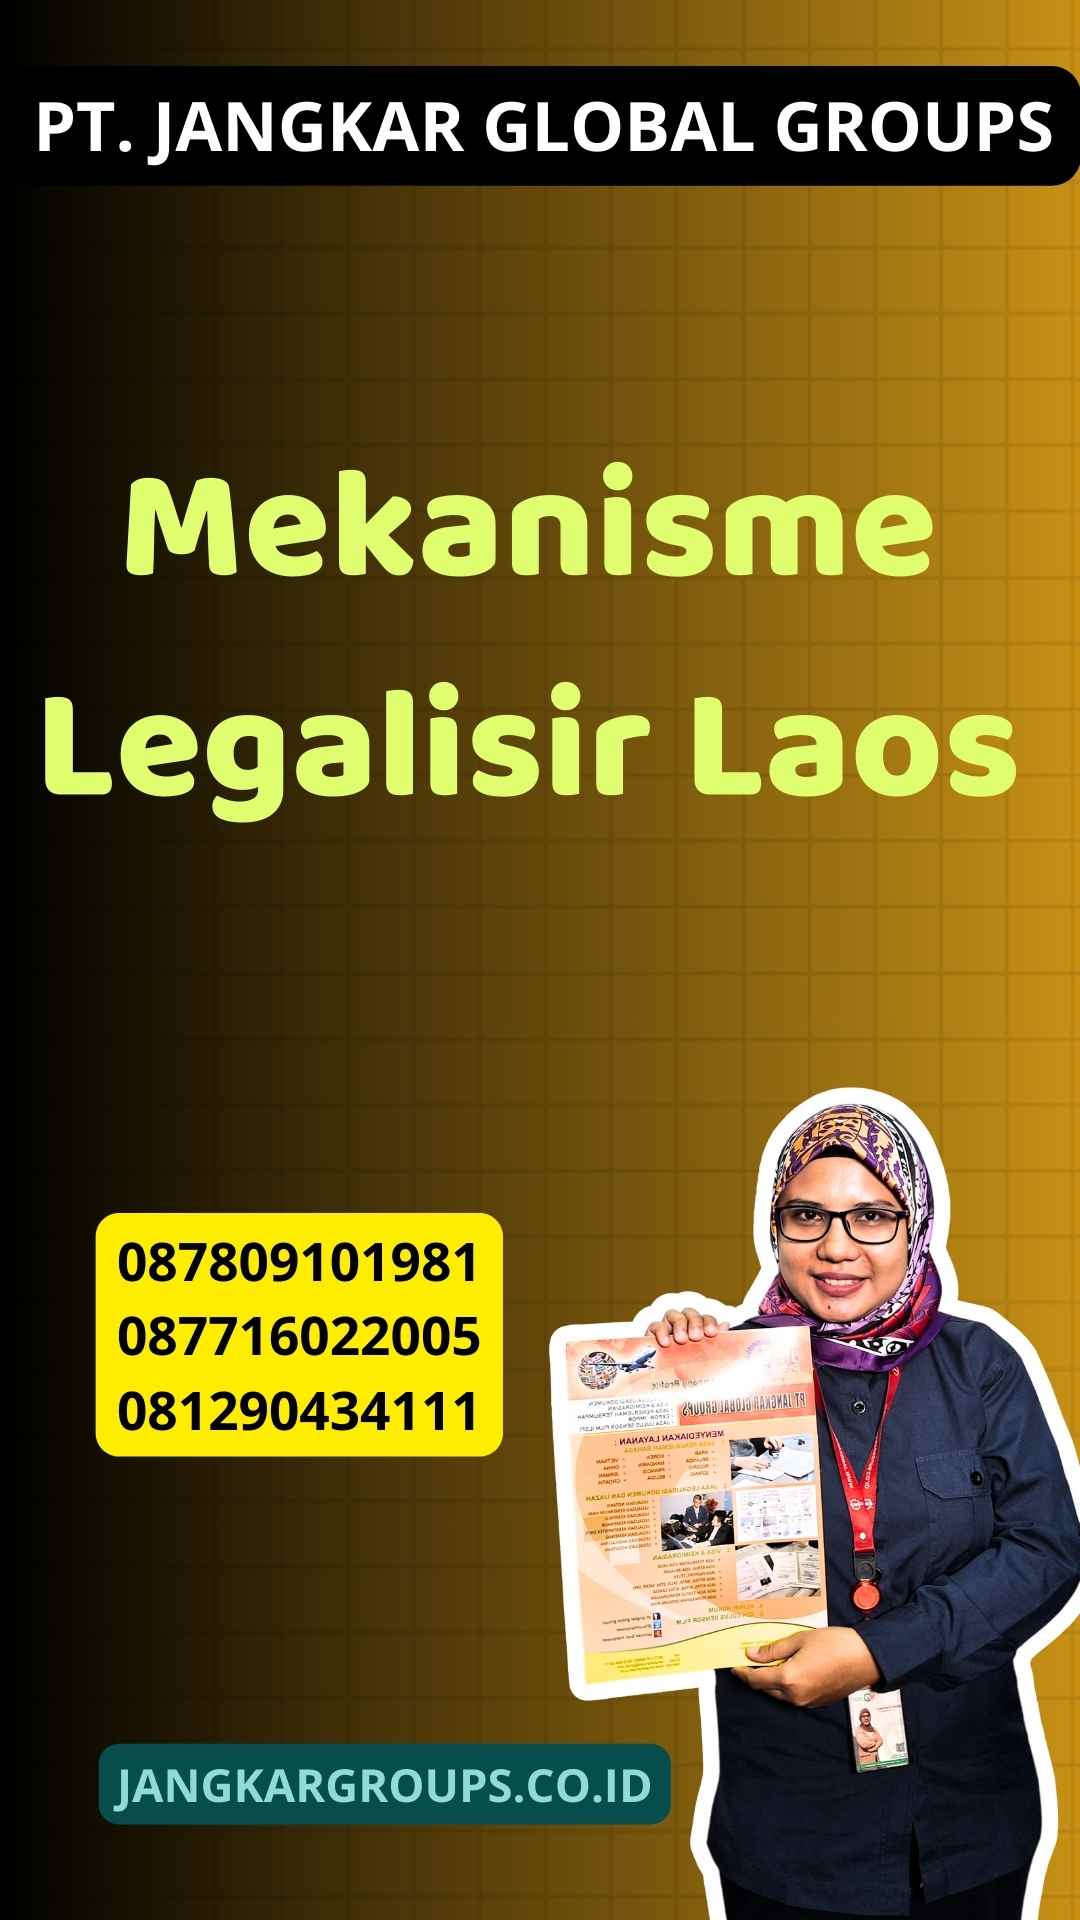 Mekanisme Legalisir Laos